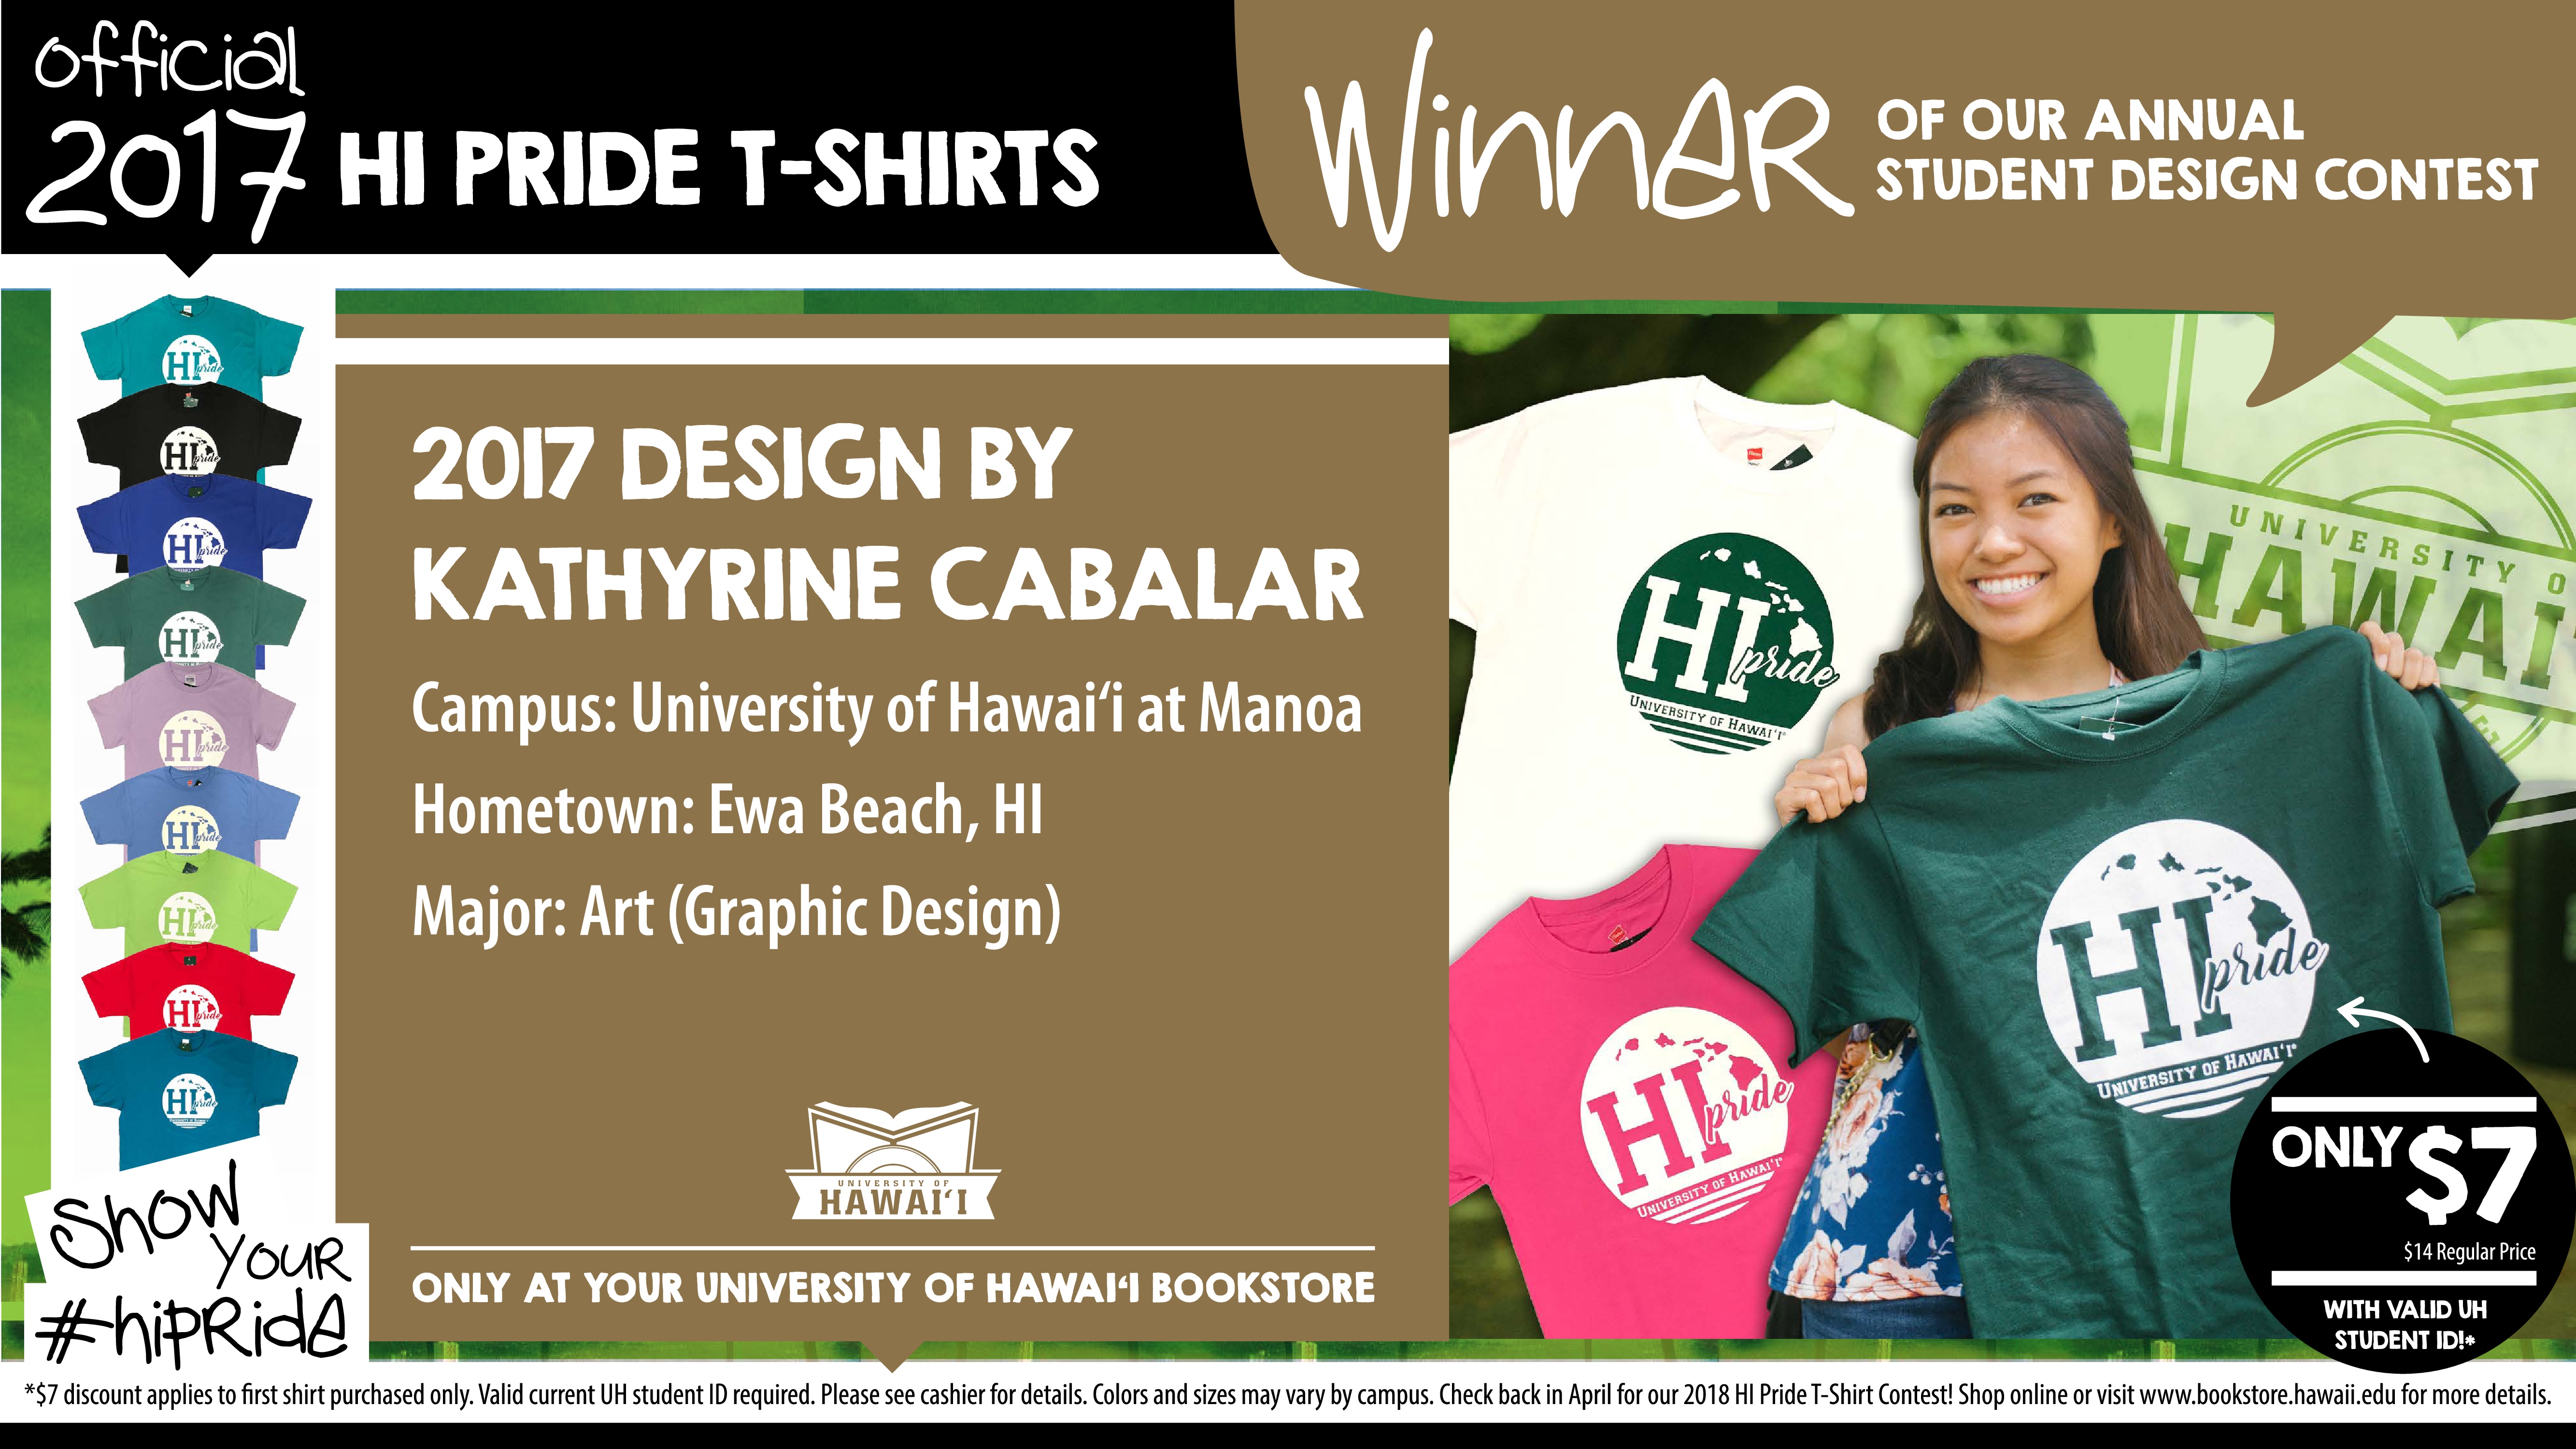 Kathyrine Cabalar, a UH student from ʻEwa Beach, designed this year's shirt.